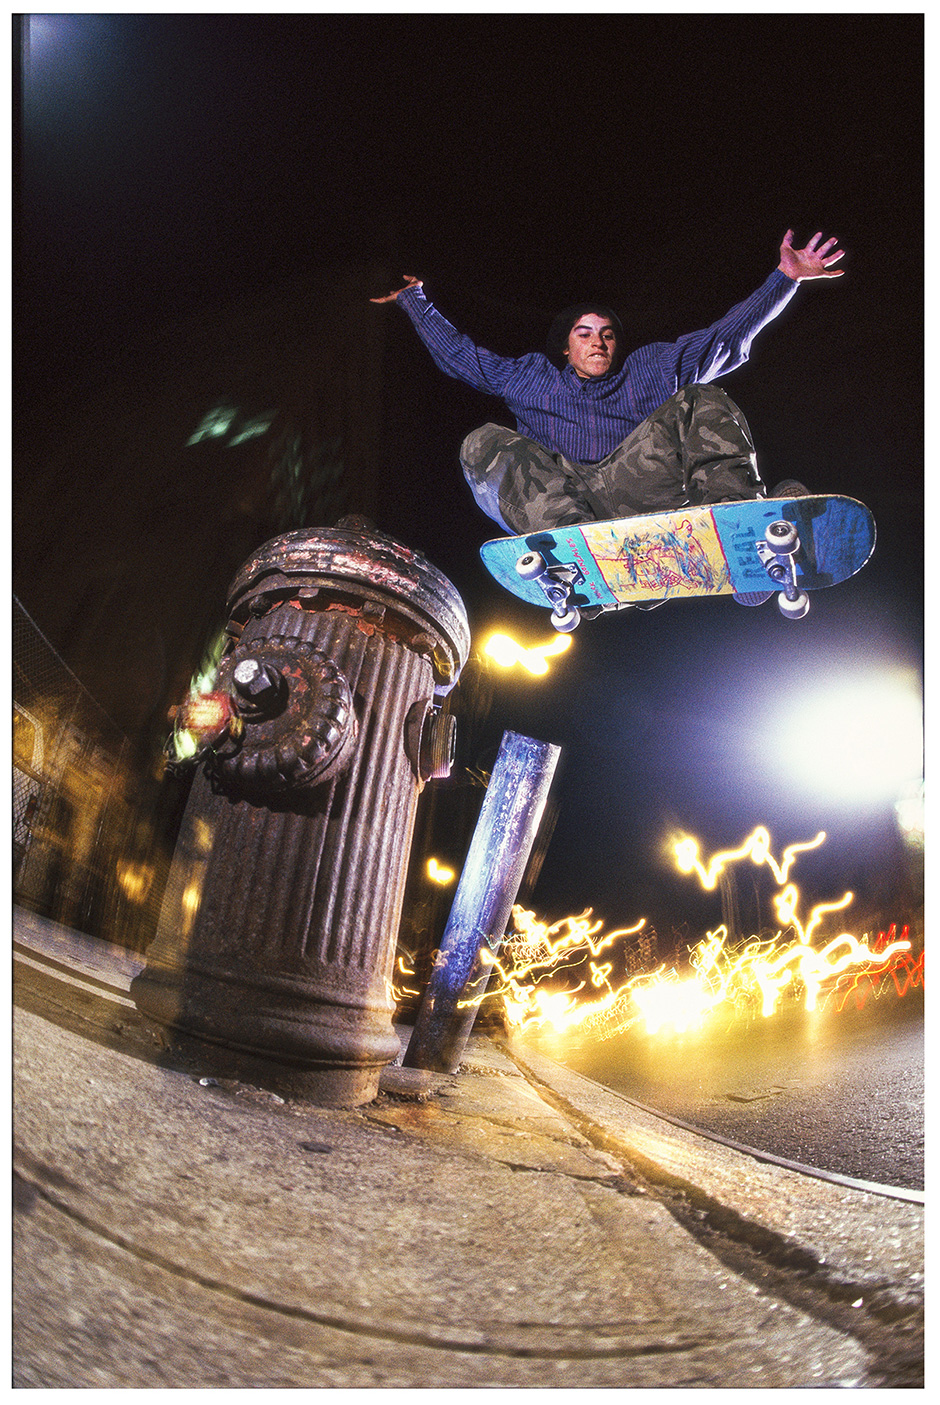 Quim Cardona switch 180 pole jams in NYC in 1996 and Benjamin Deberdt captures it. Joe Gavin's fav photo for his Slam City Skates Visuals interview